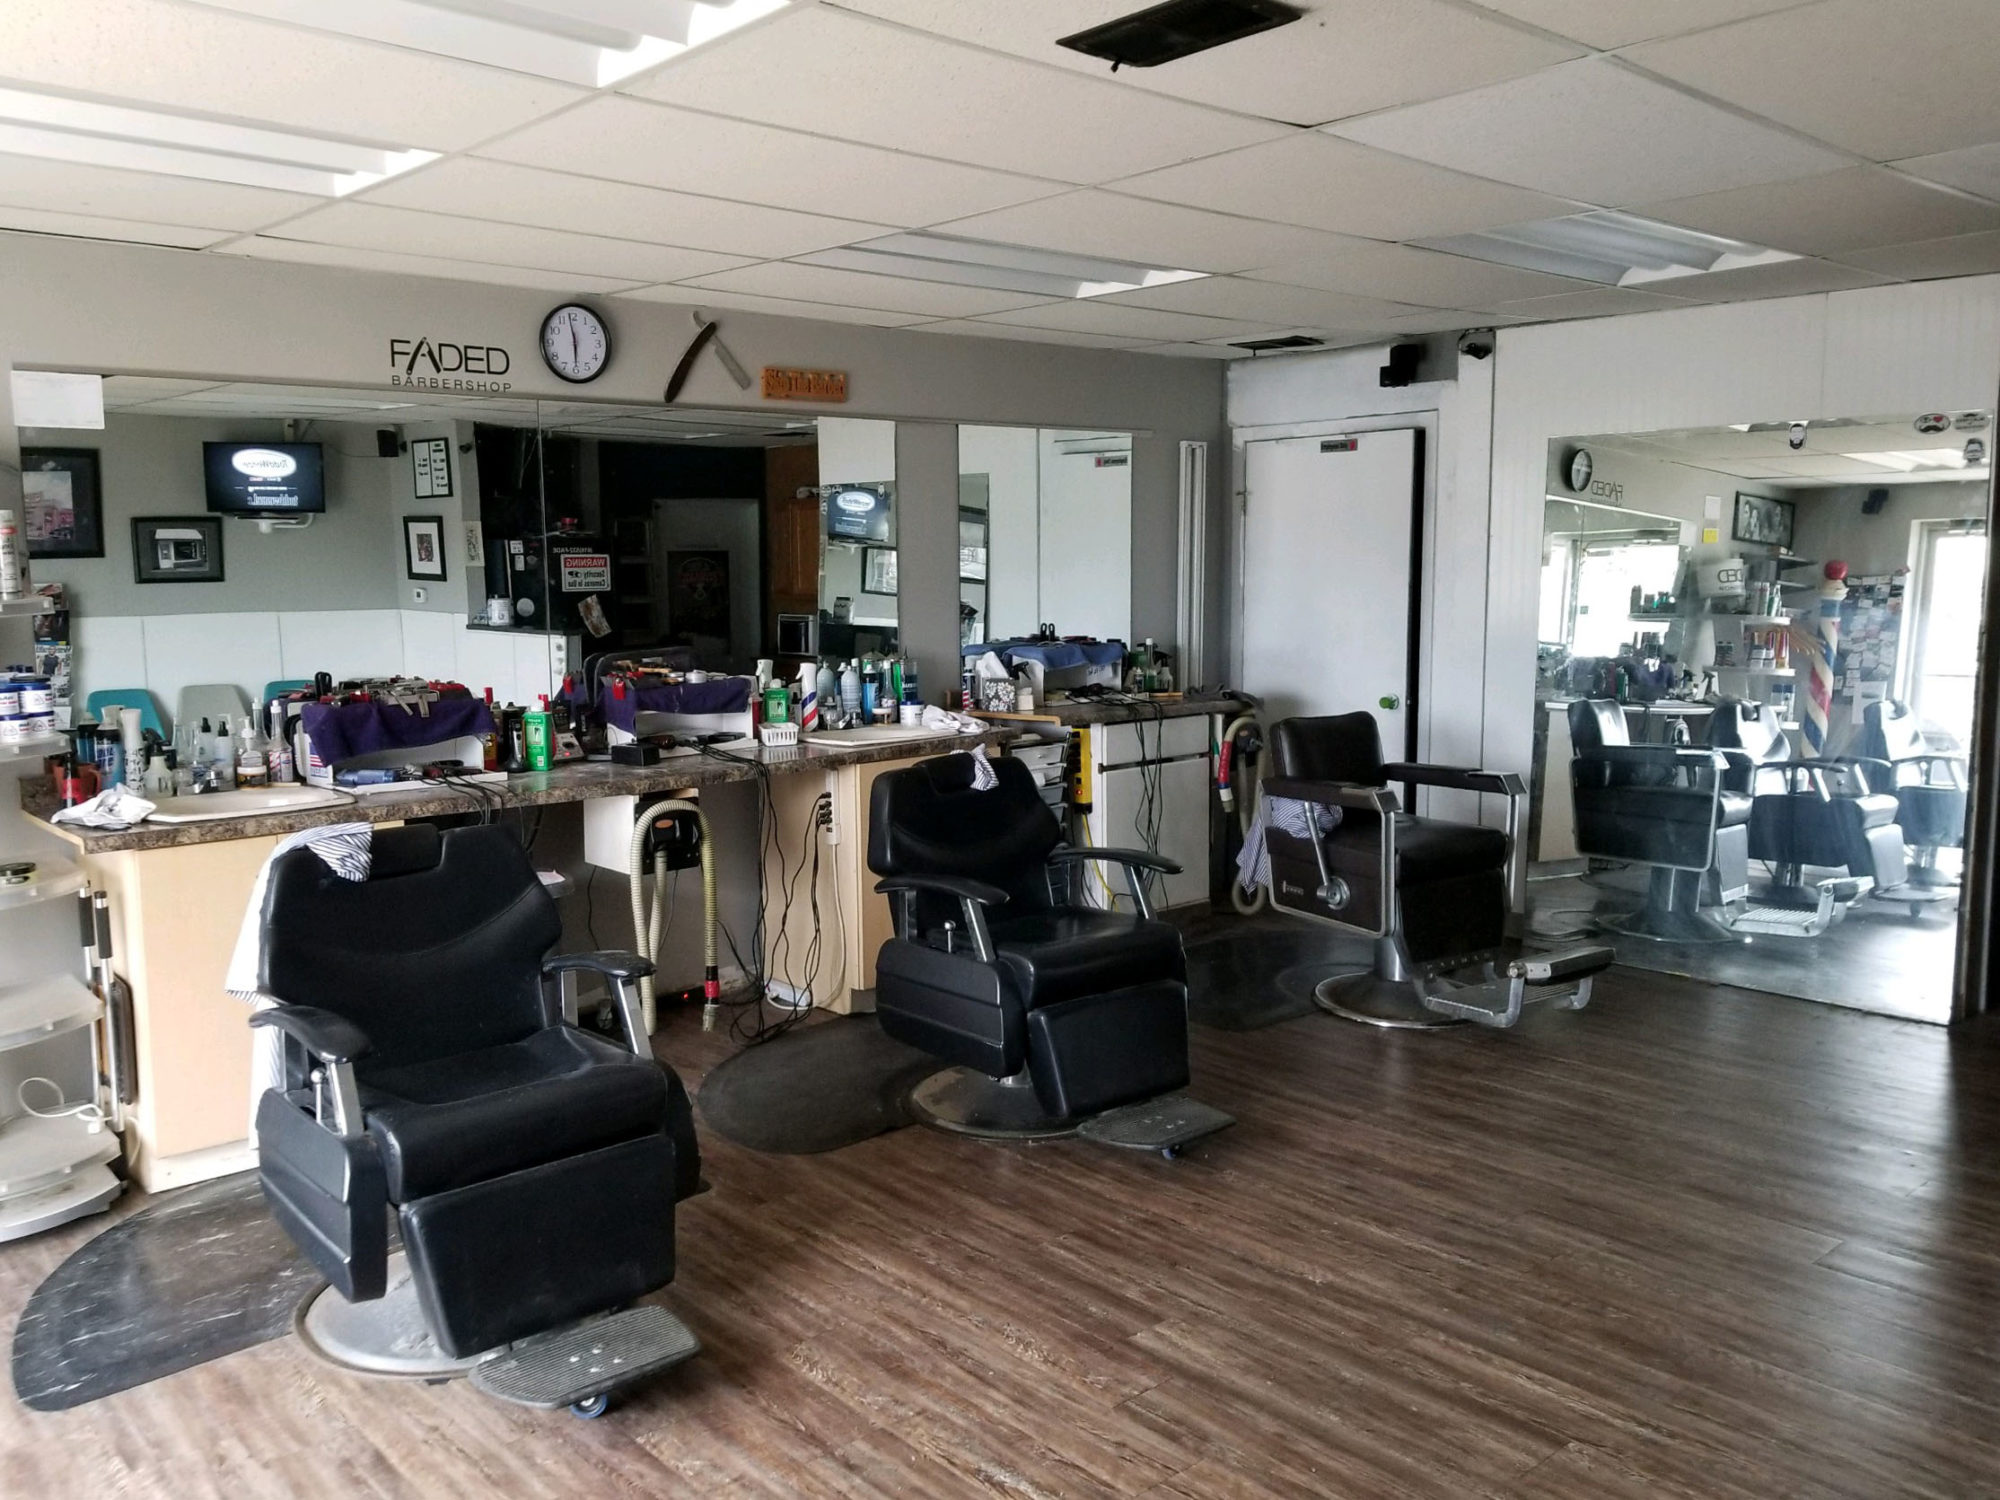 Inside the Barbershop